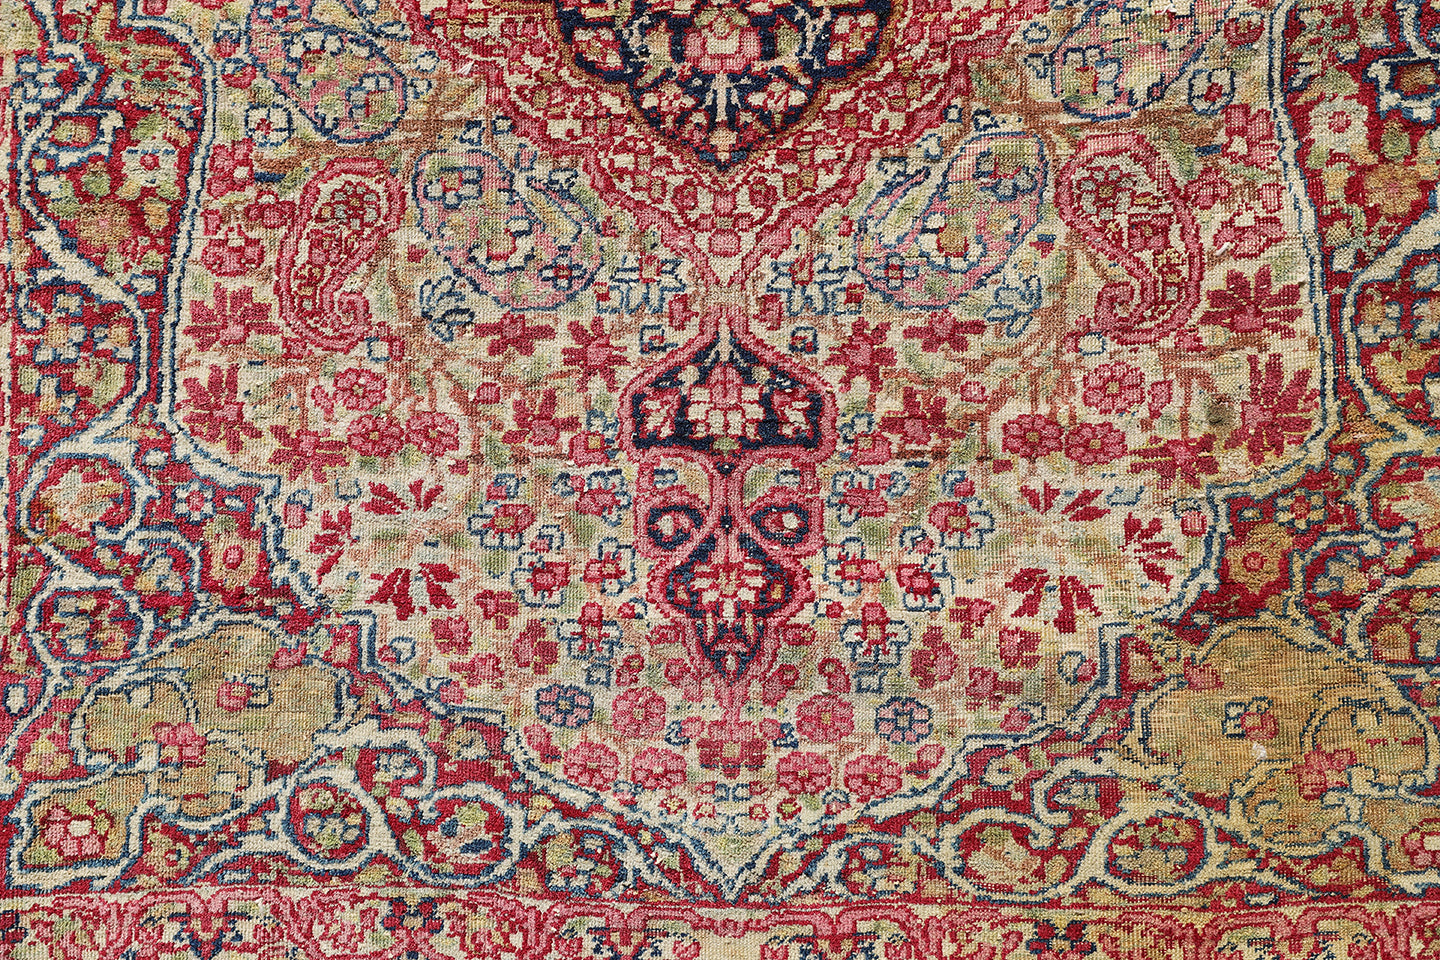 4'x6' Antique Persian Kermanshah Rug